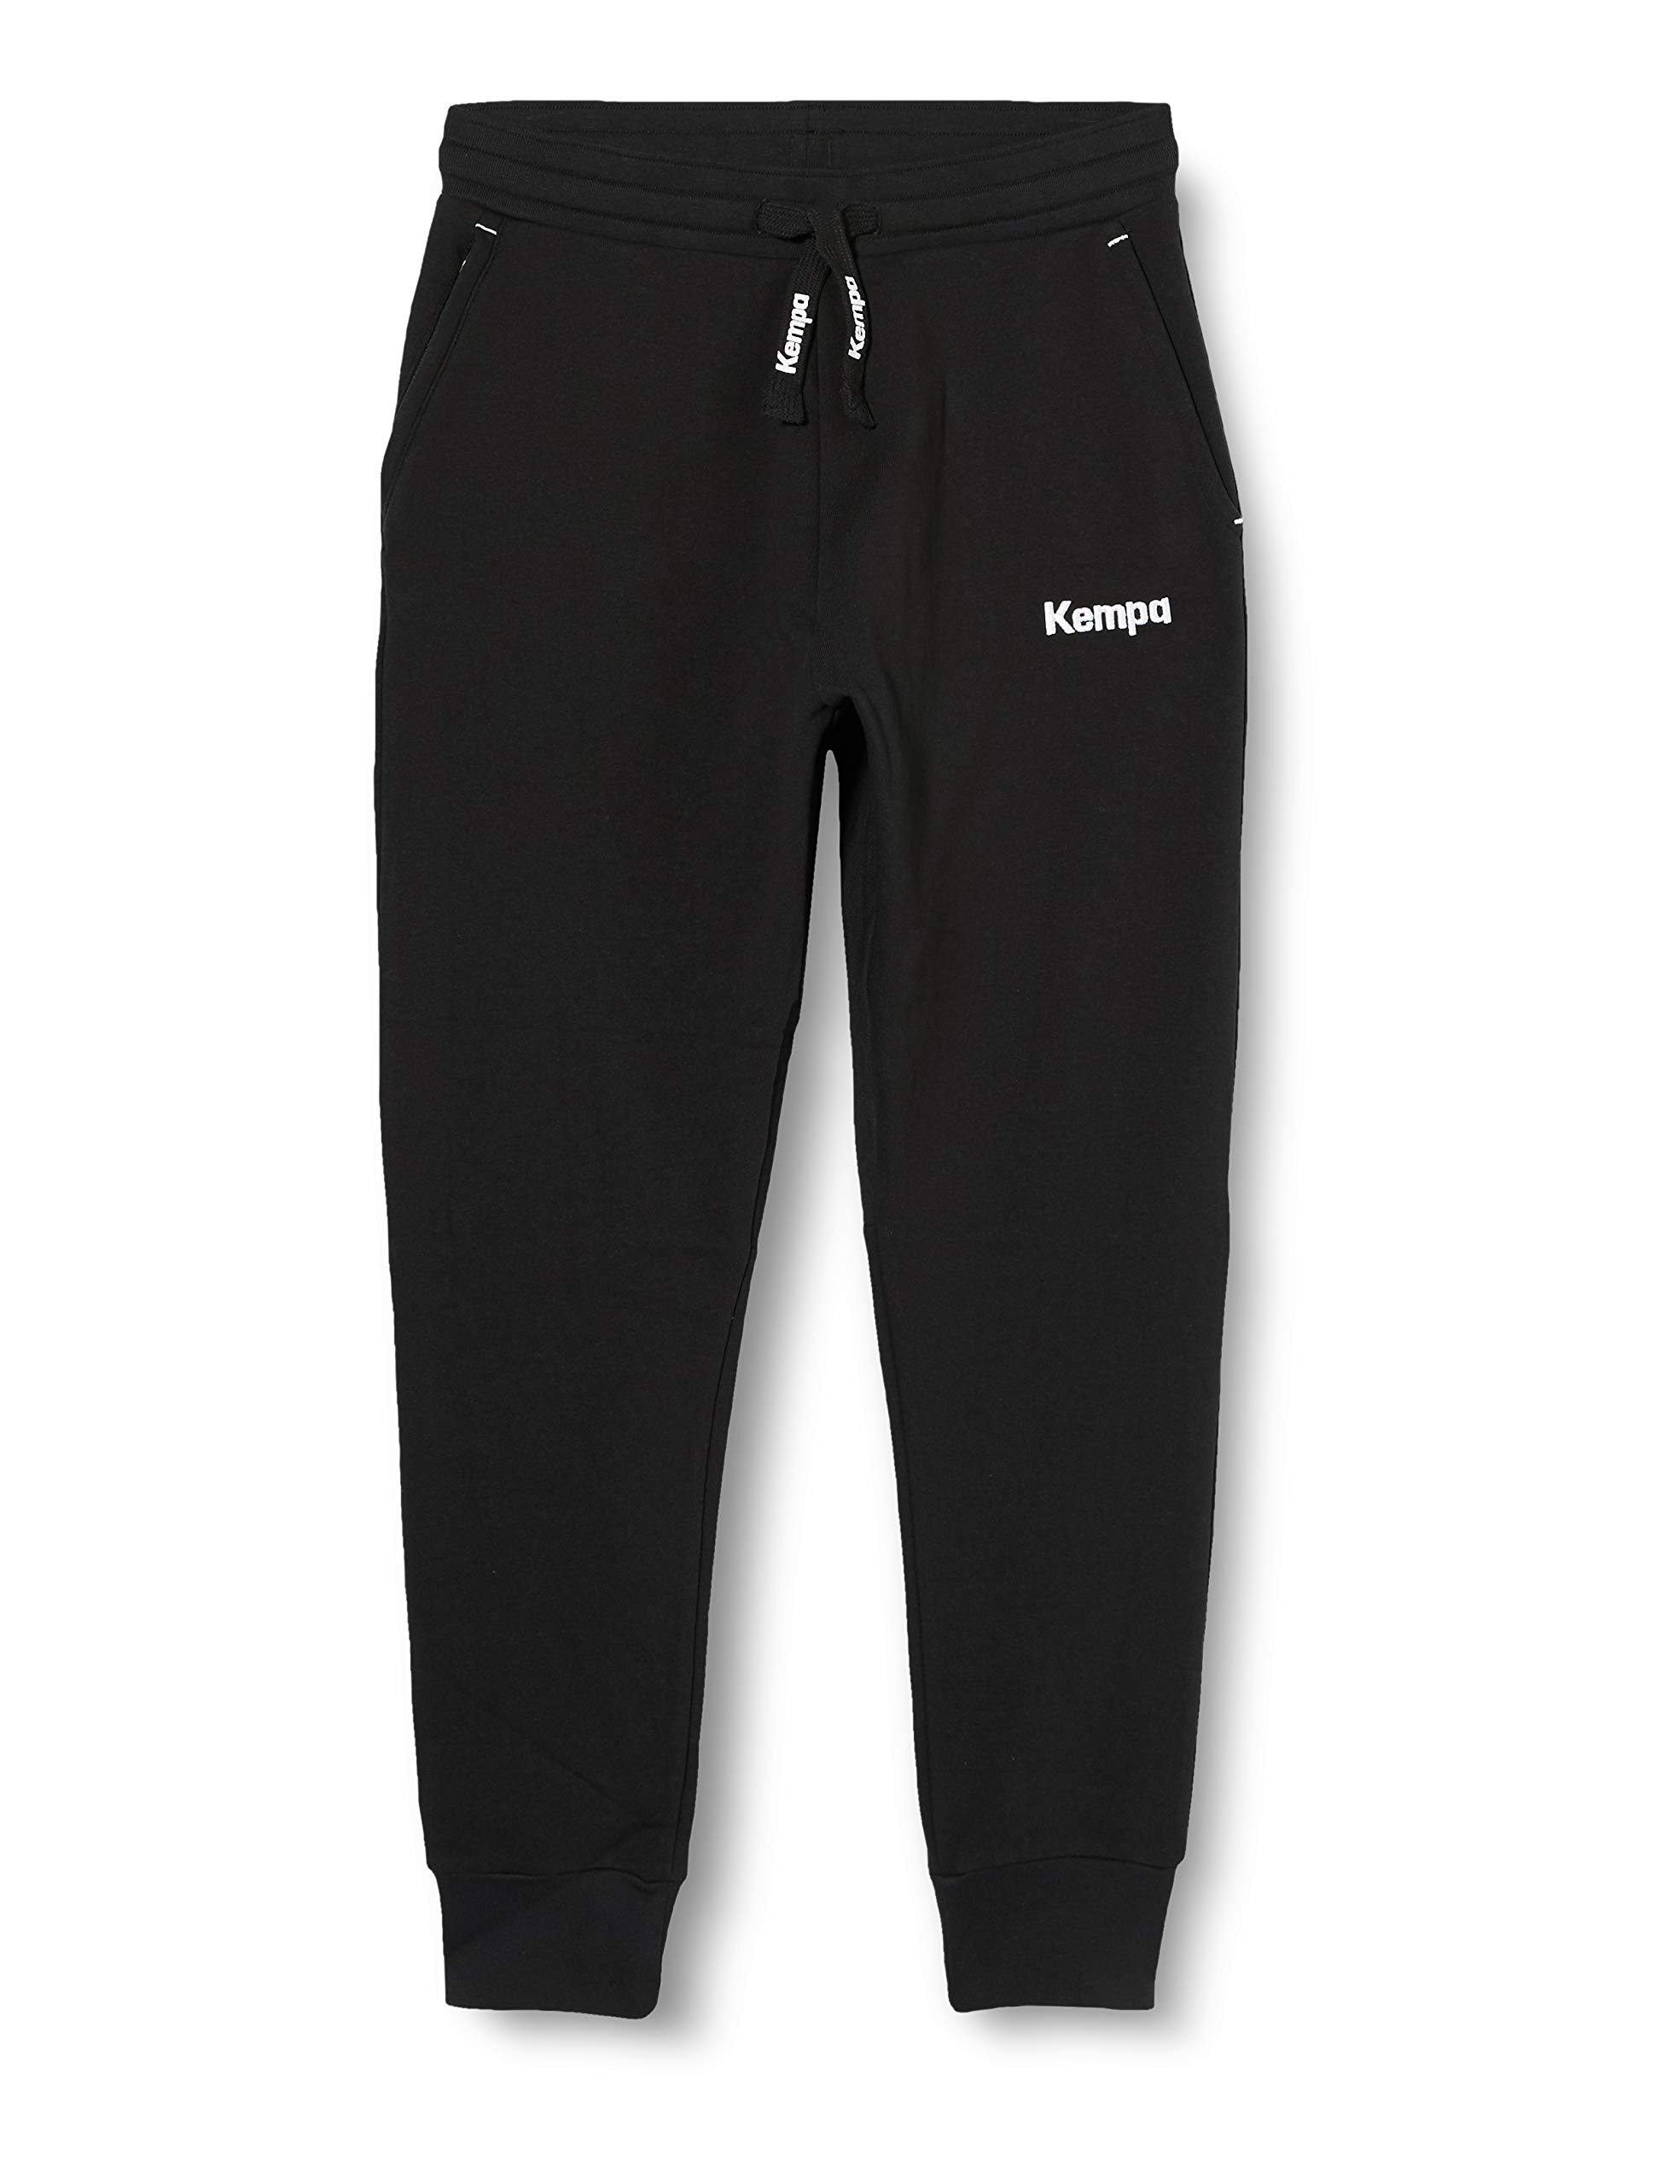 Kempa Kinder Core 2.0 Modern Pants Hose, schwarz, 128